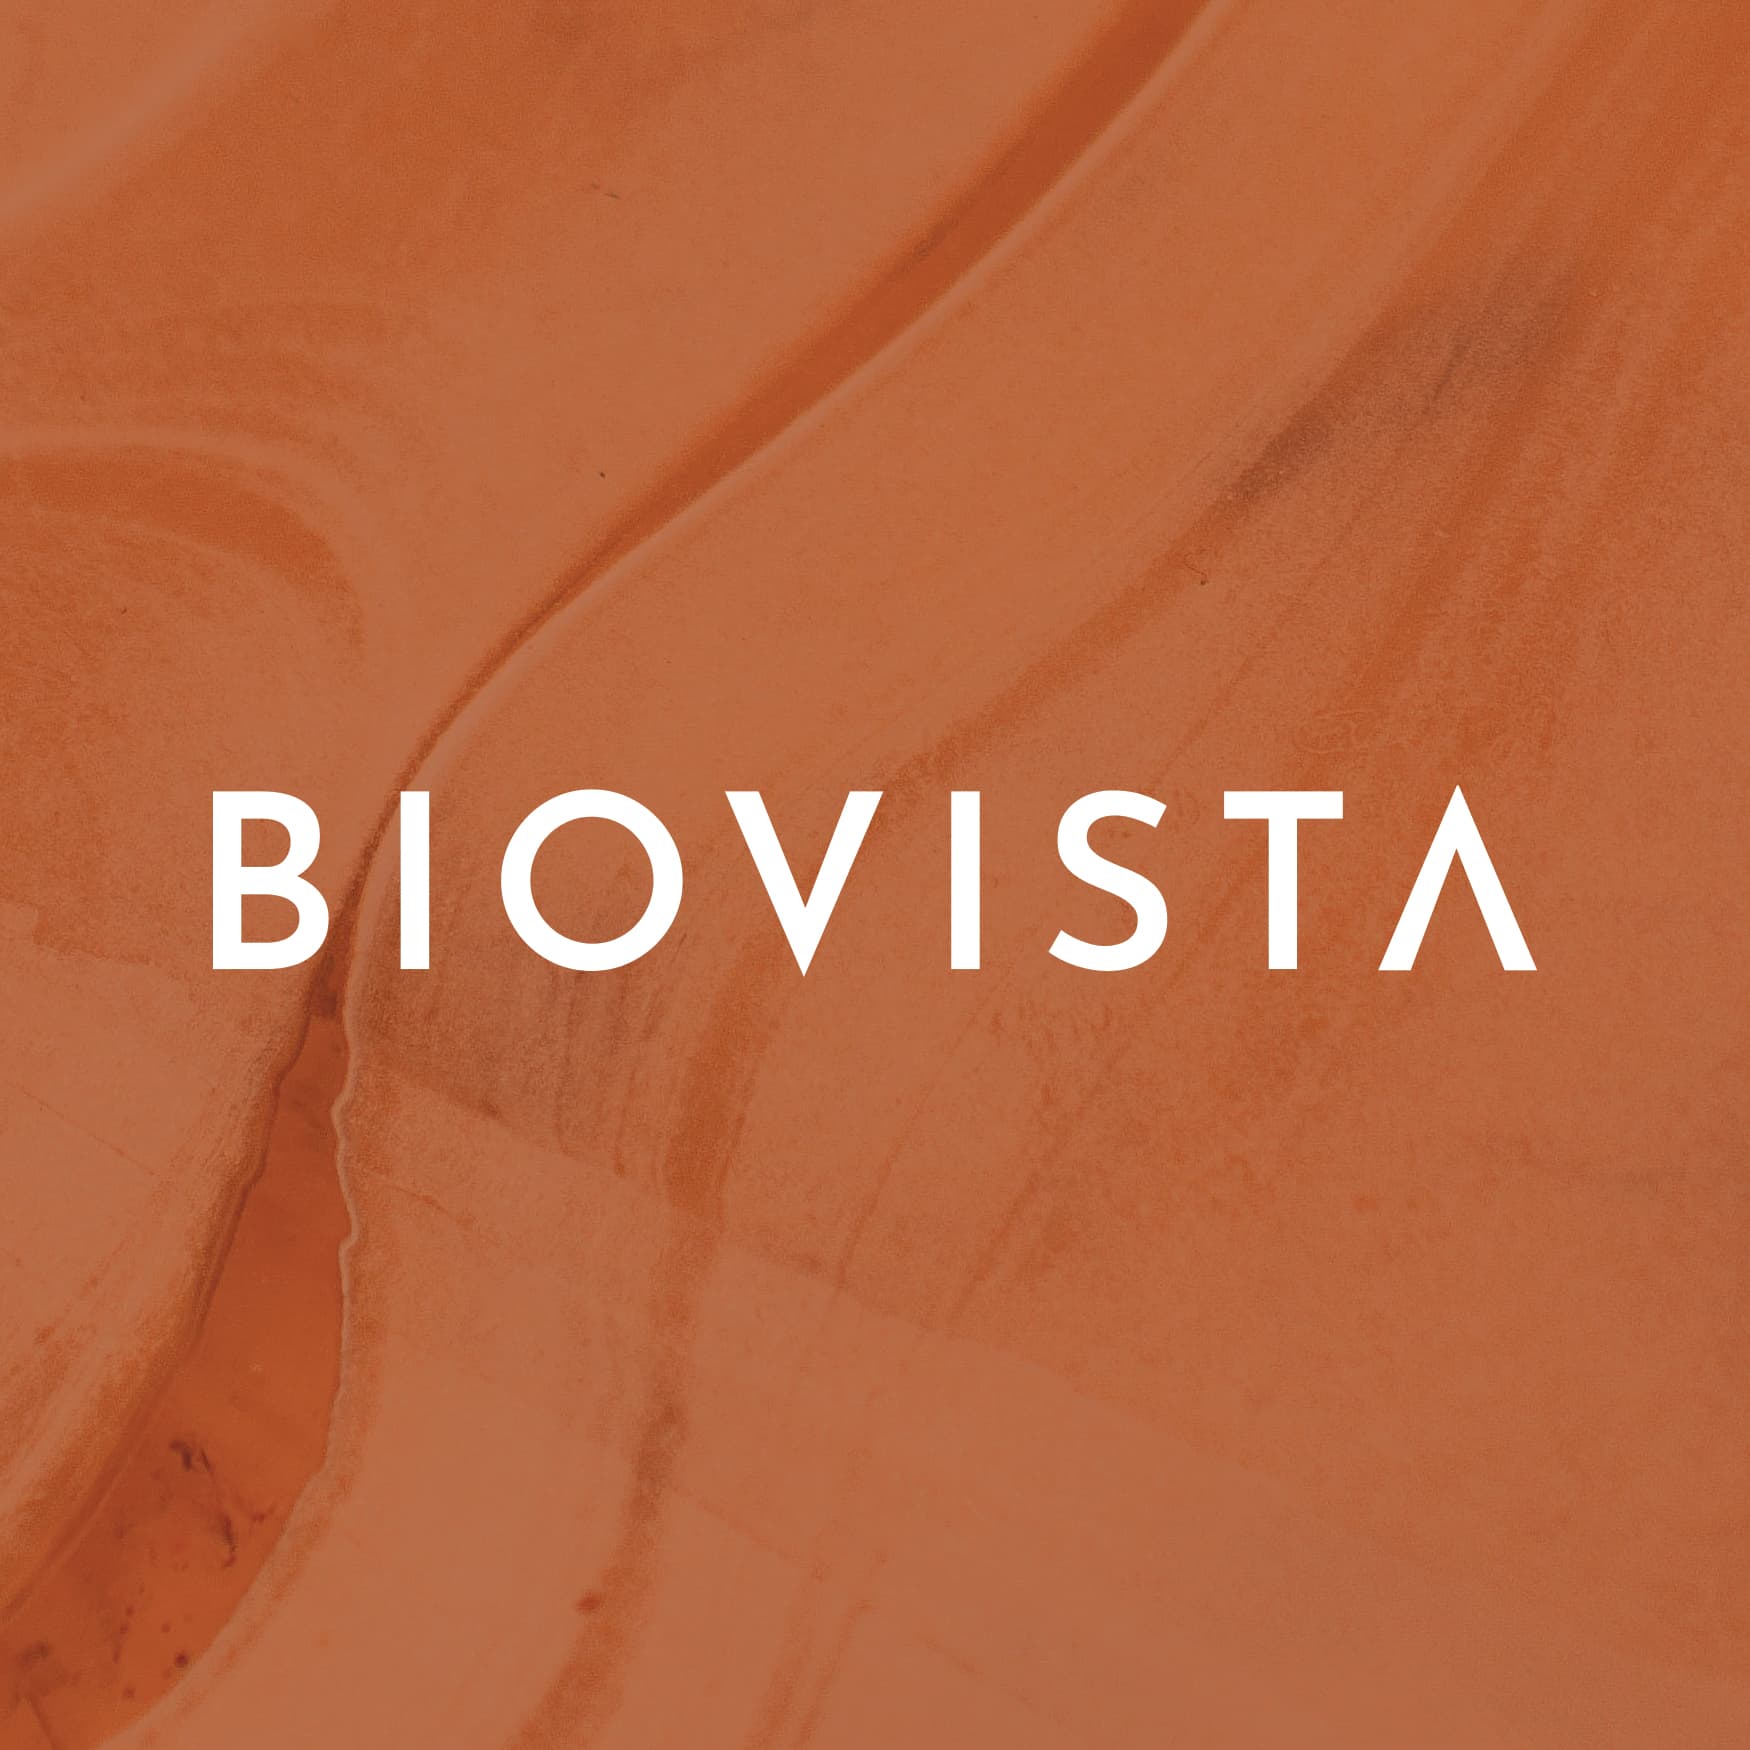 Image of an orange rock texture with a white typographic biovista logo over.